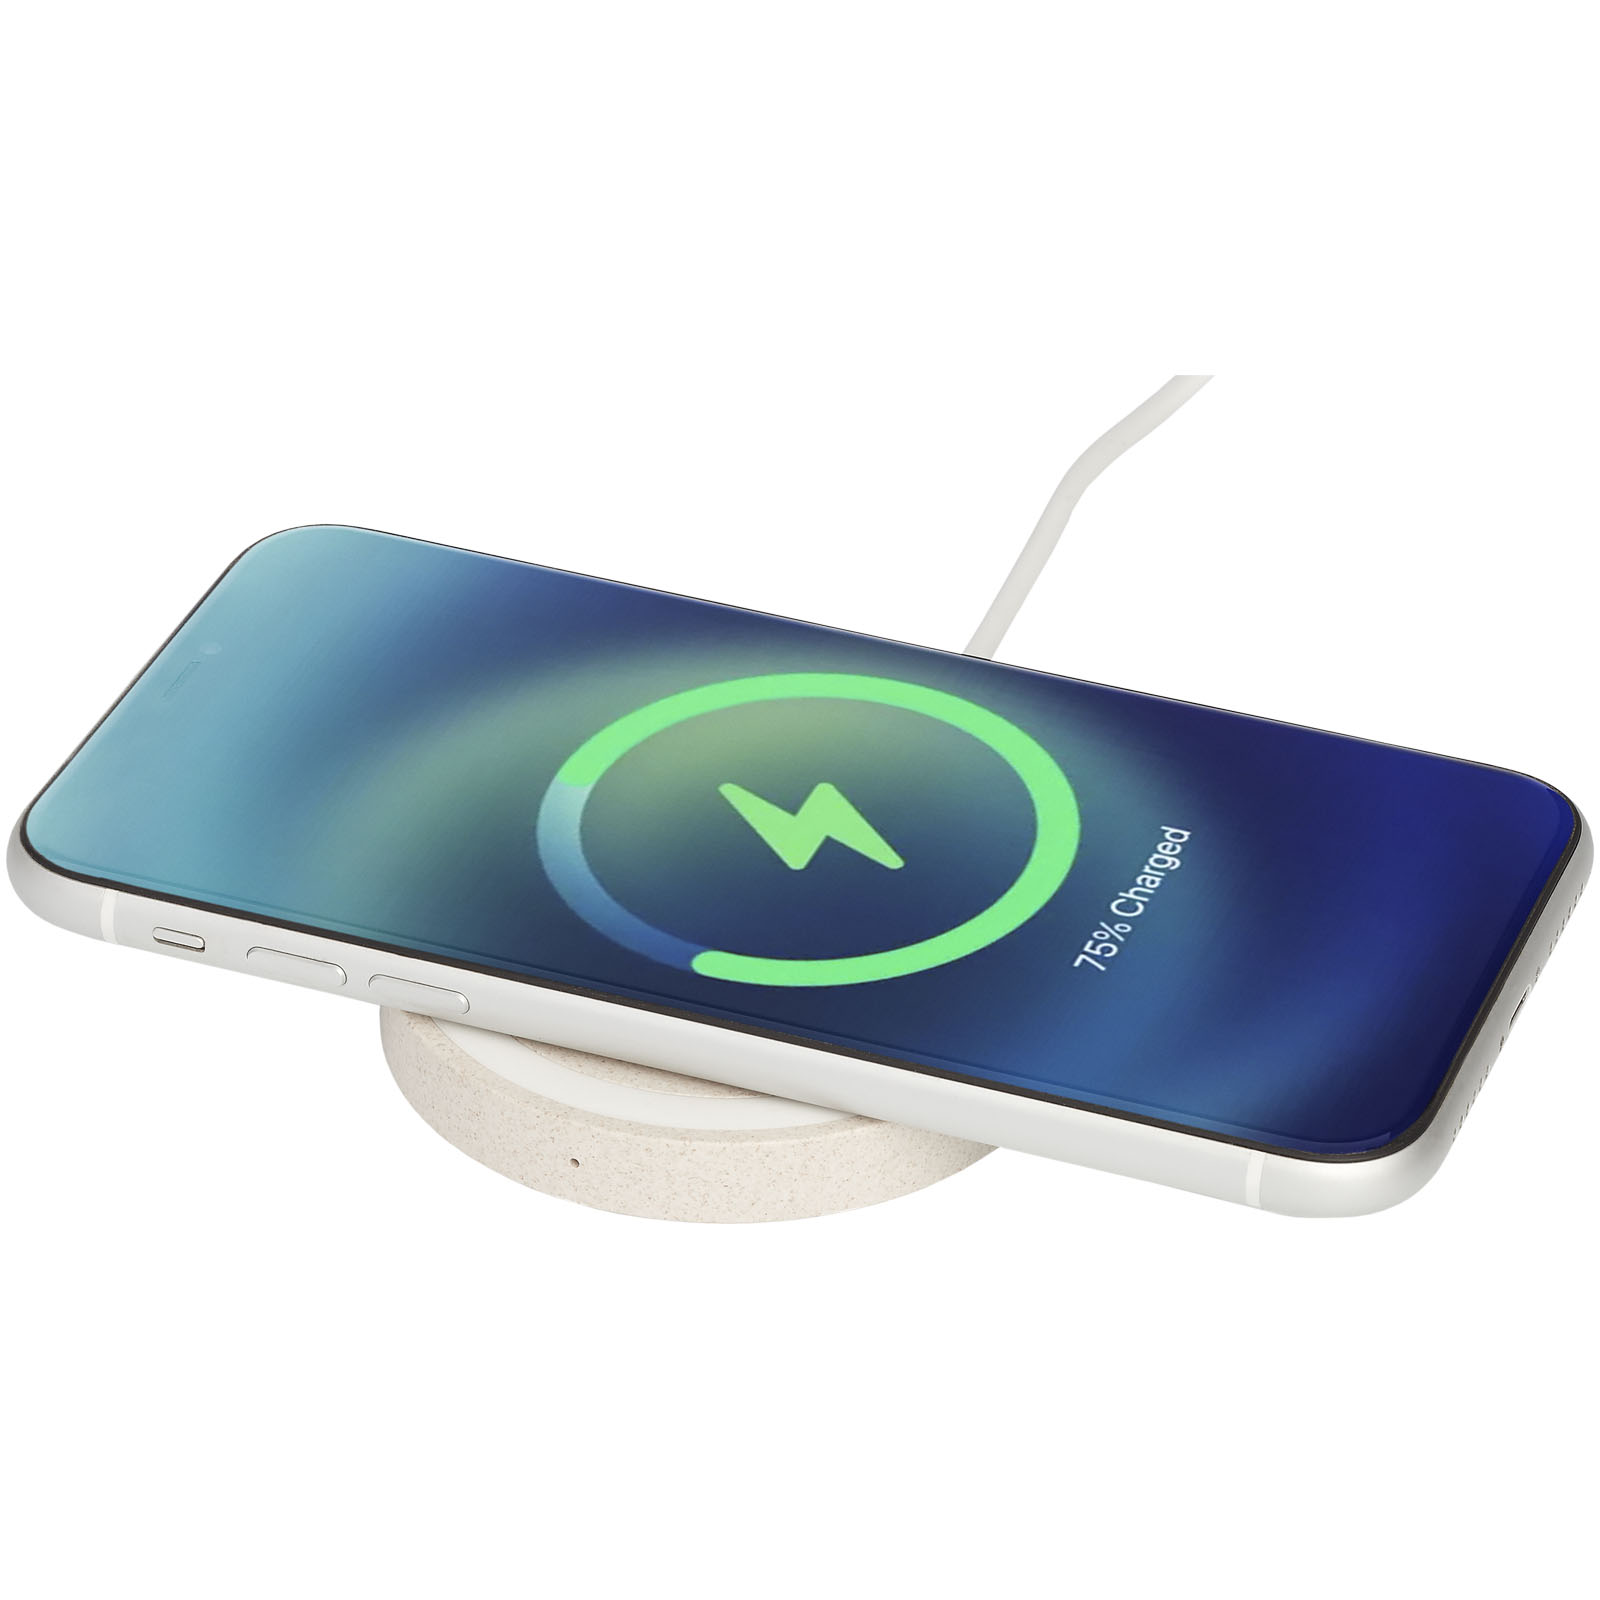 Wireless Charging - Naka 5W wheat straw wireless charging pad